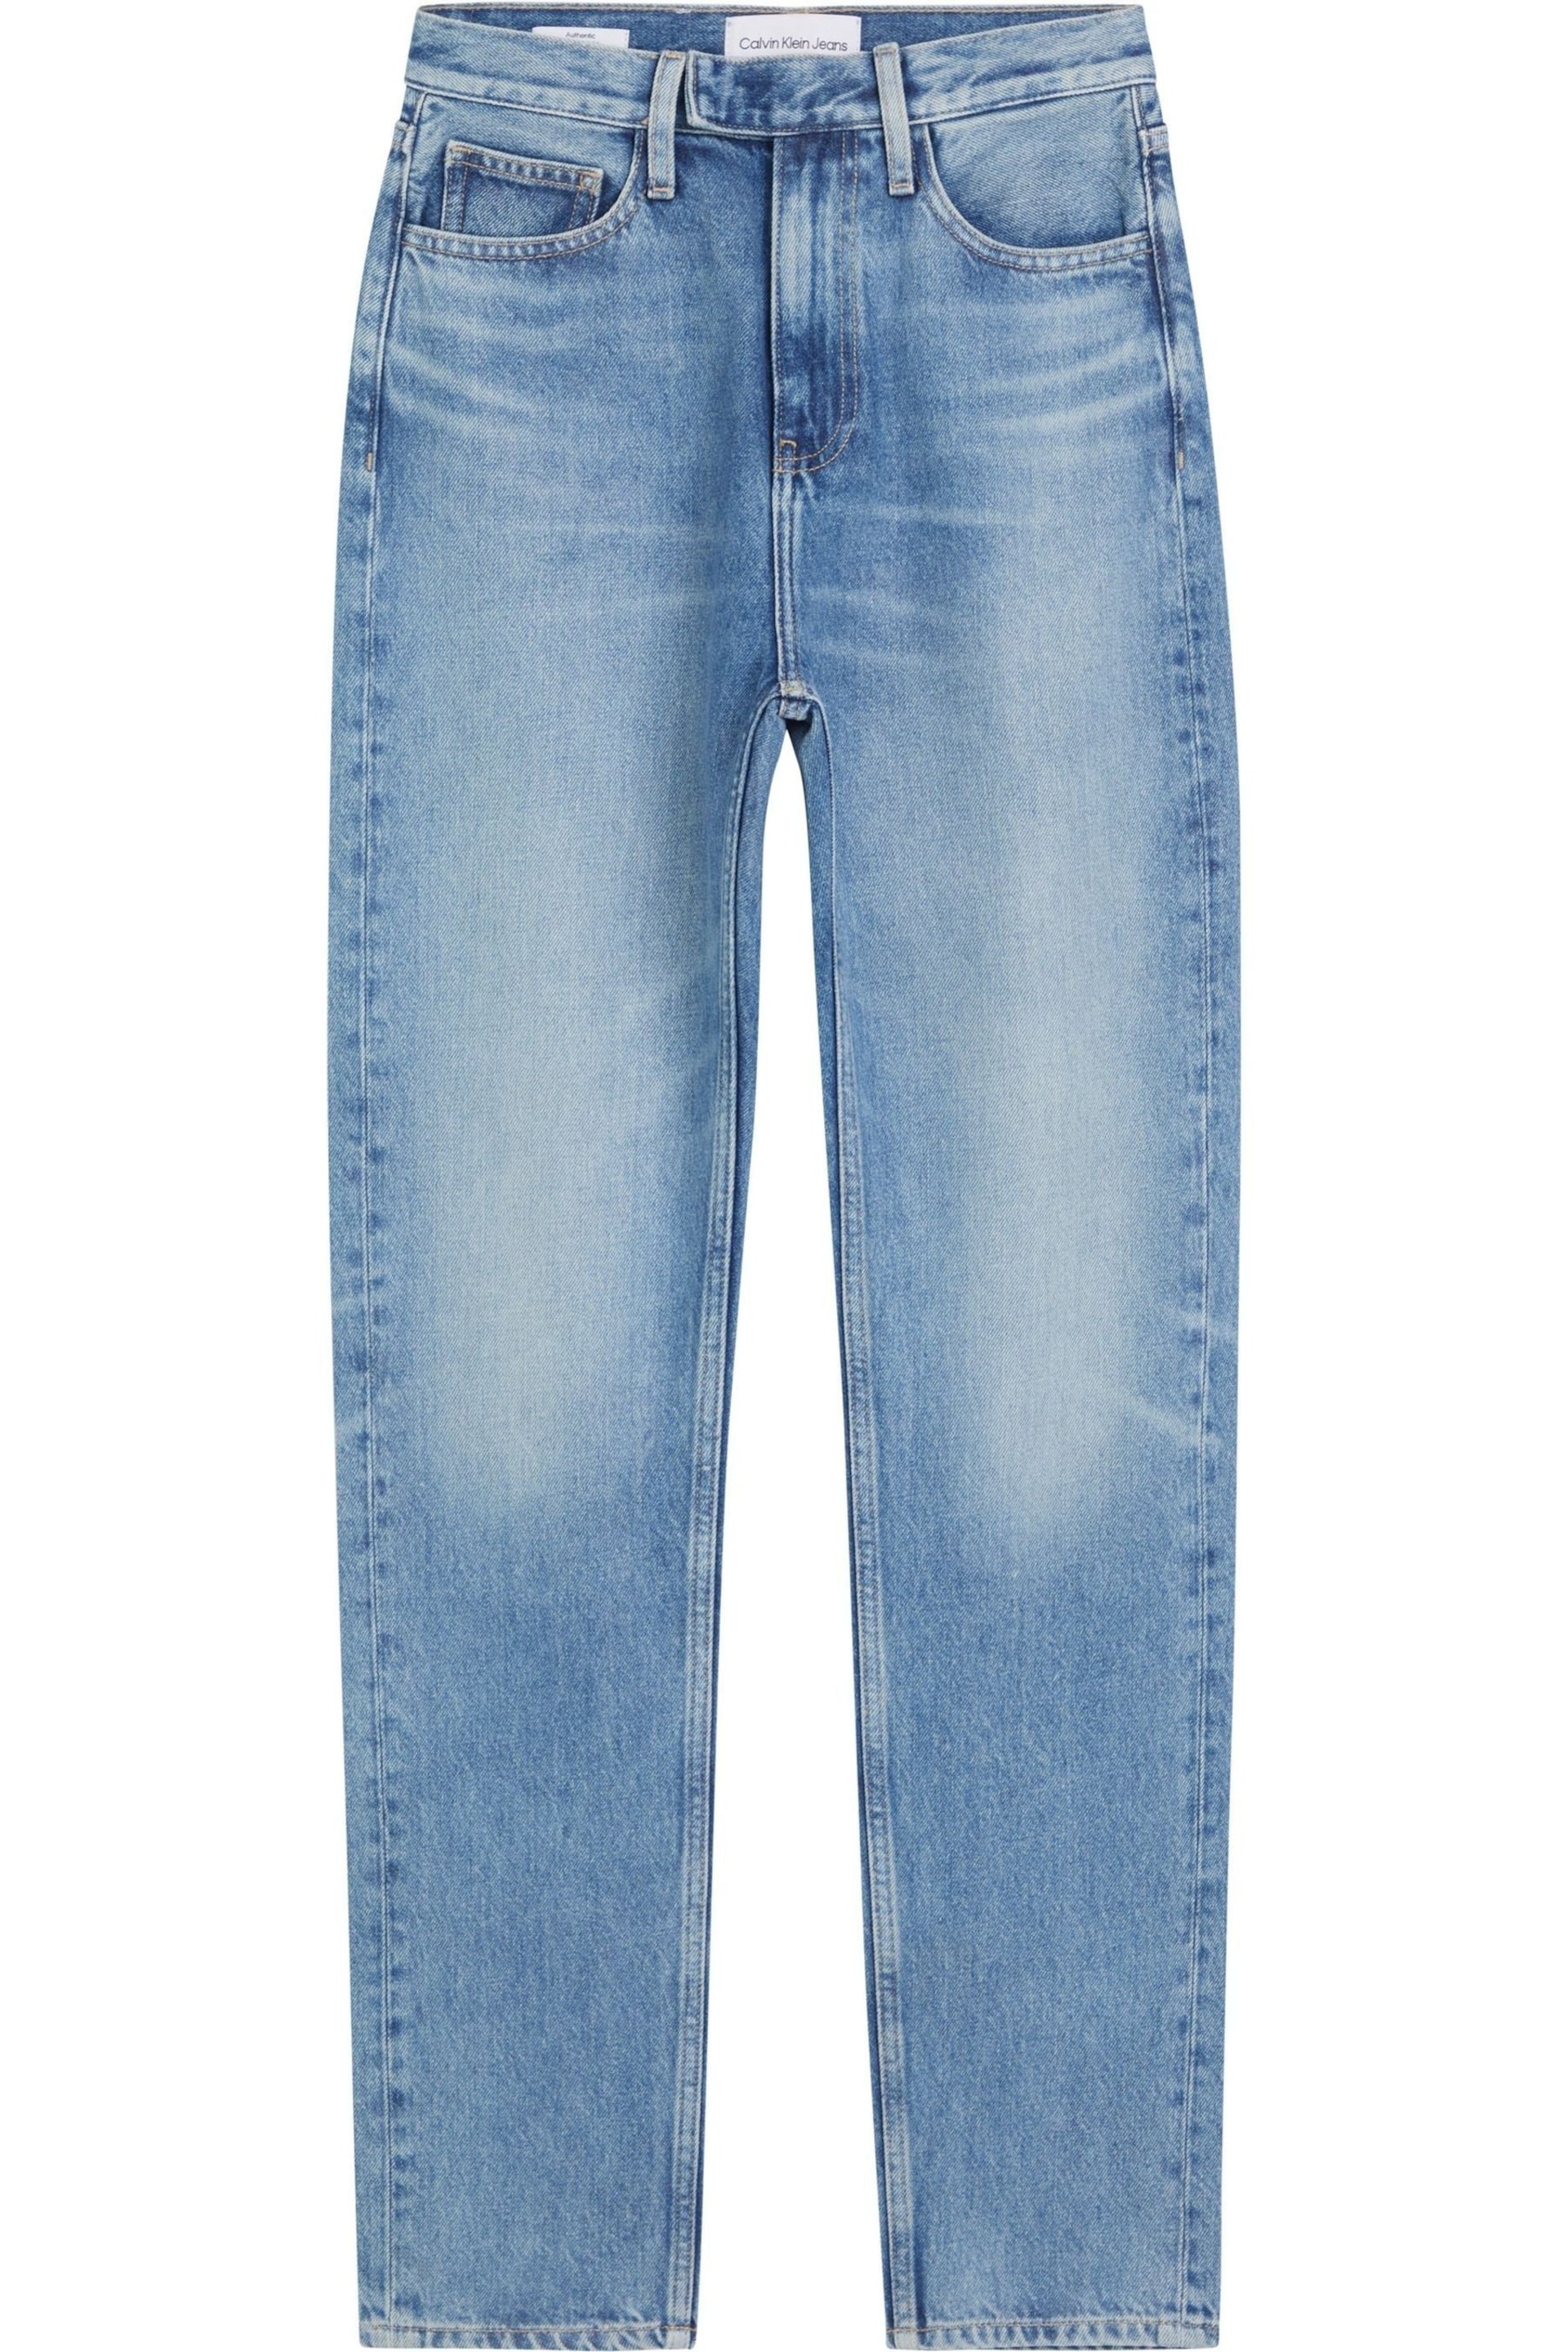 Calvin Klein Jeans Blue Authentic Slim Jeans - Image 6 of 7